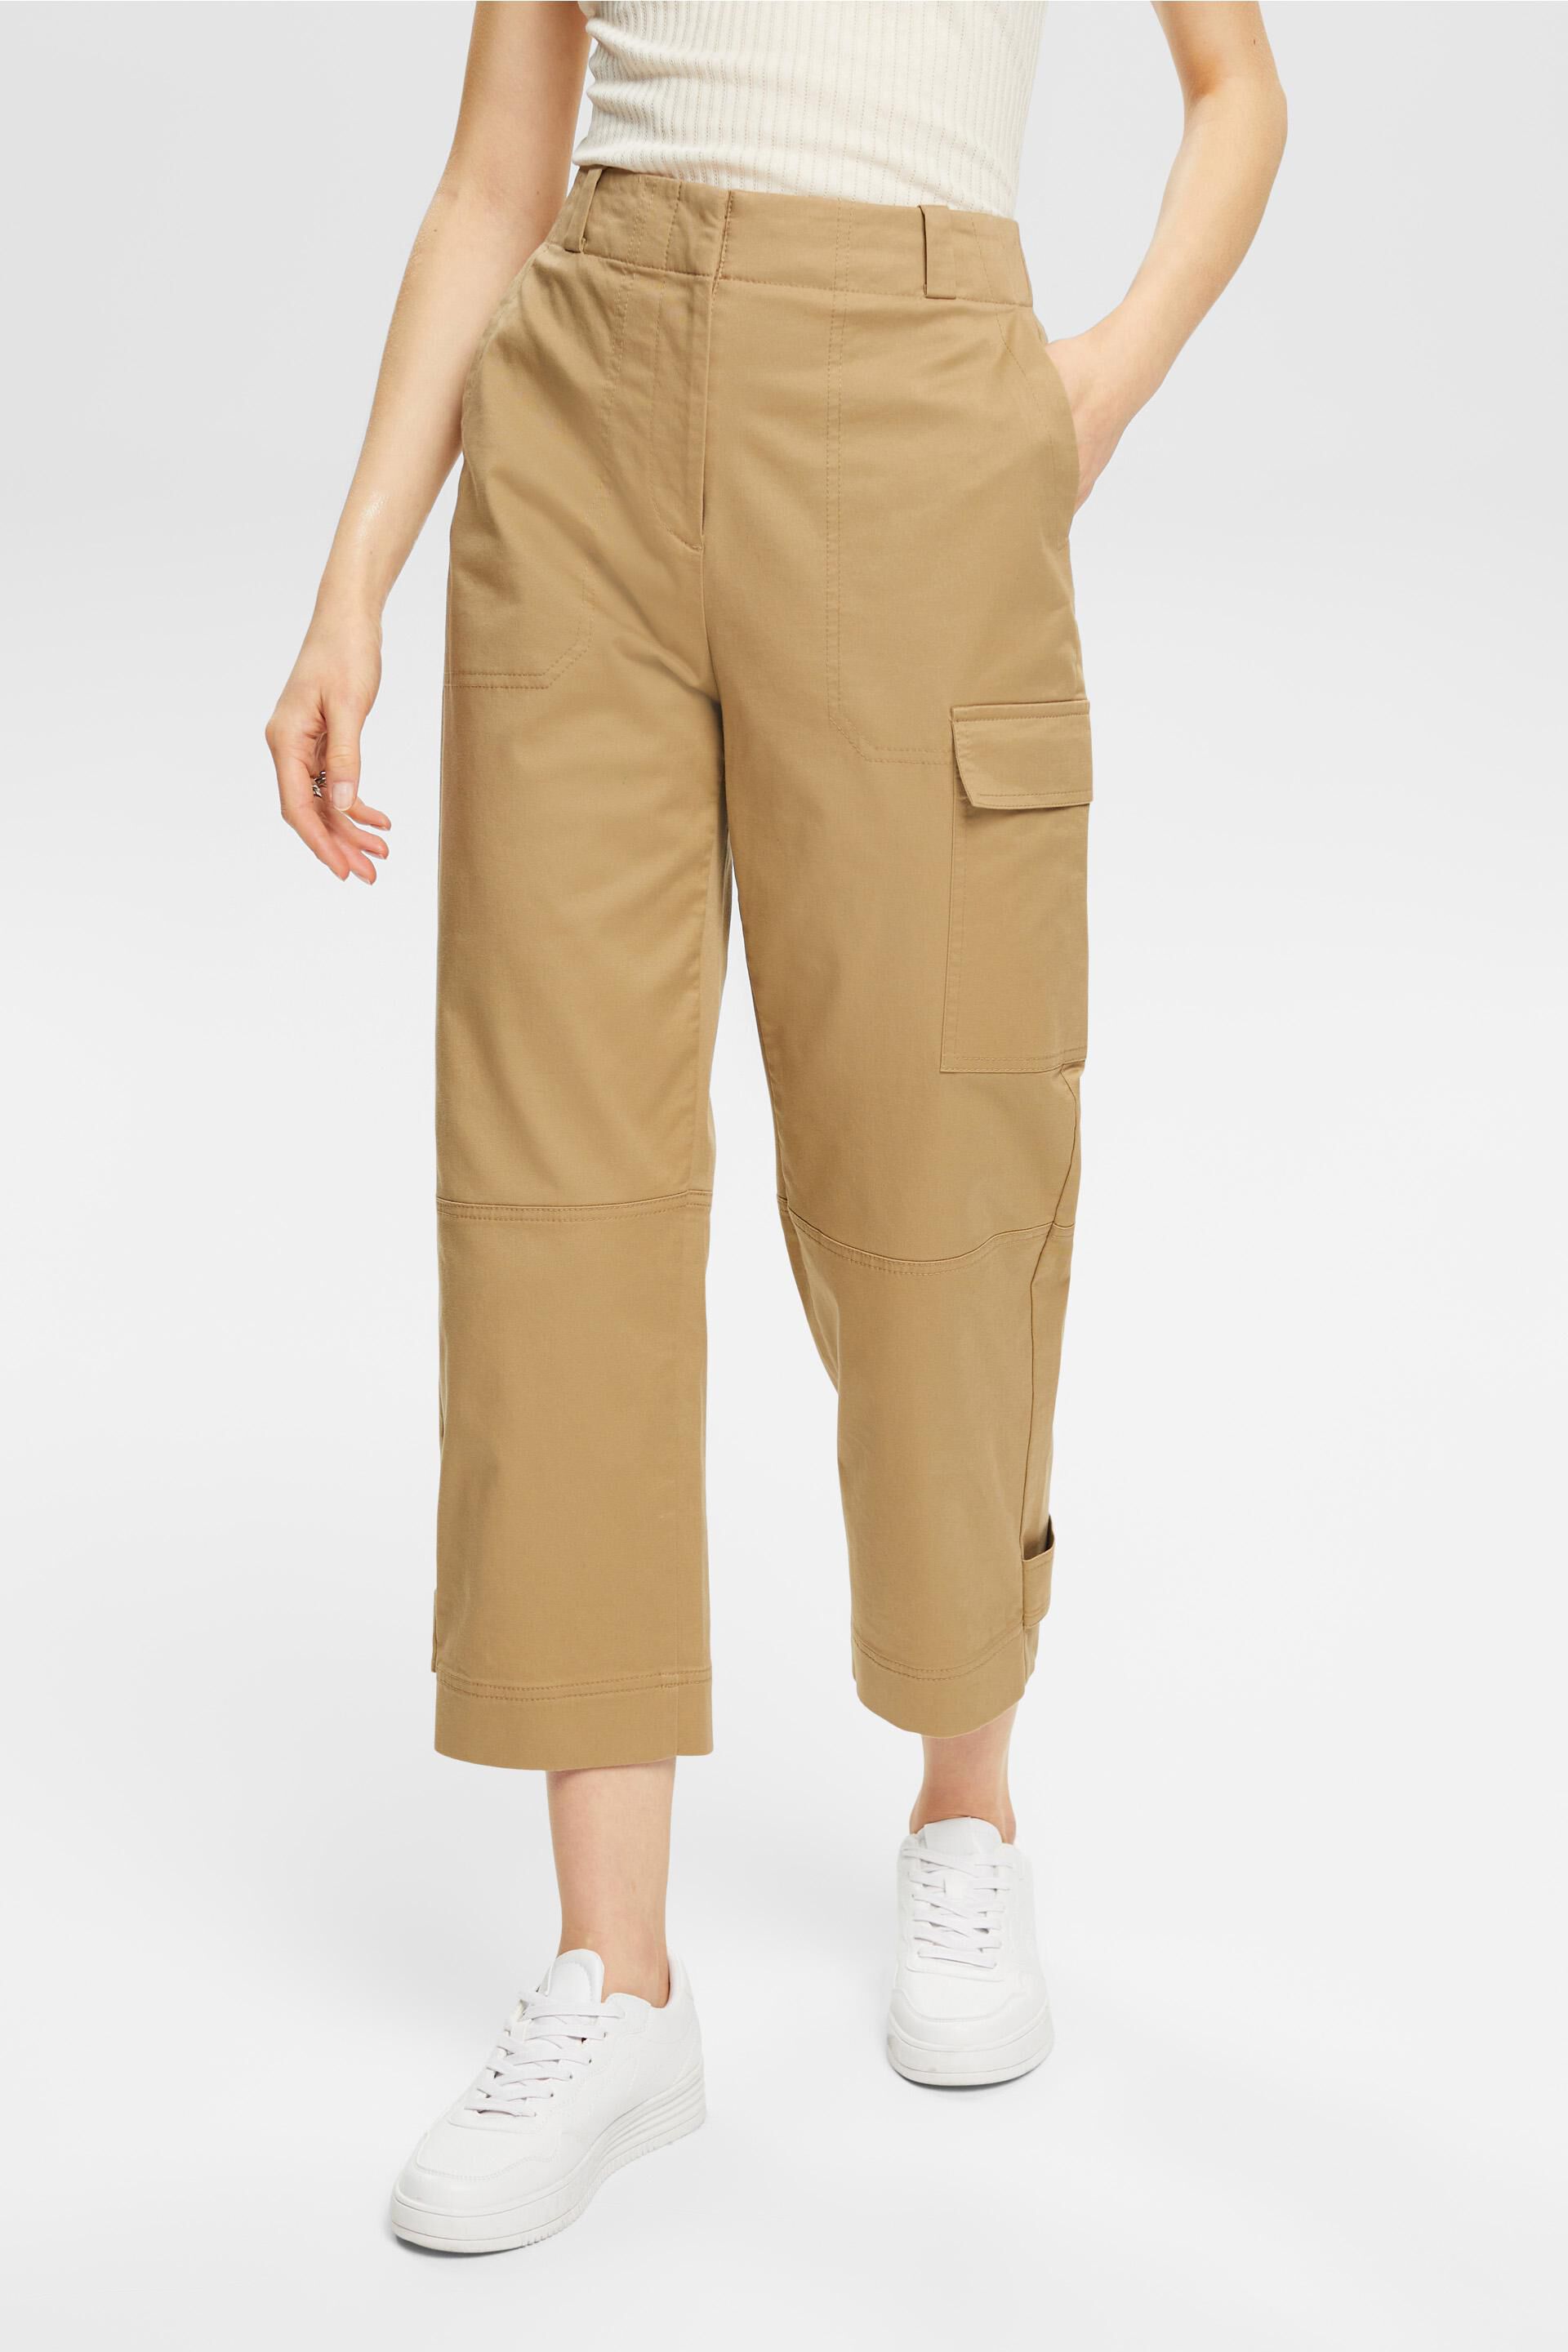 Buy Khaki Trousers & Pants for Men by ECKO UNLTD Online | Ajio.com